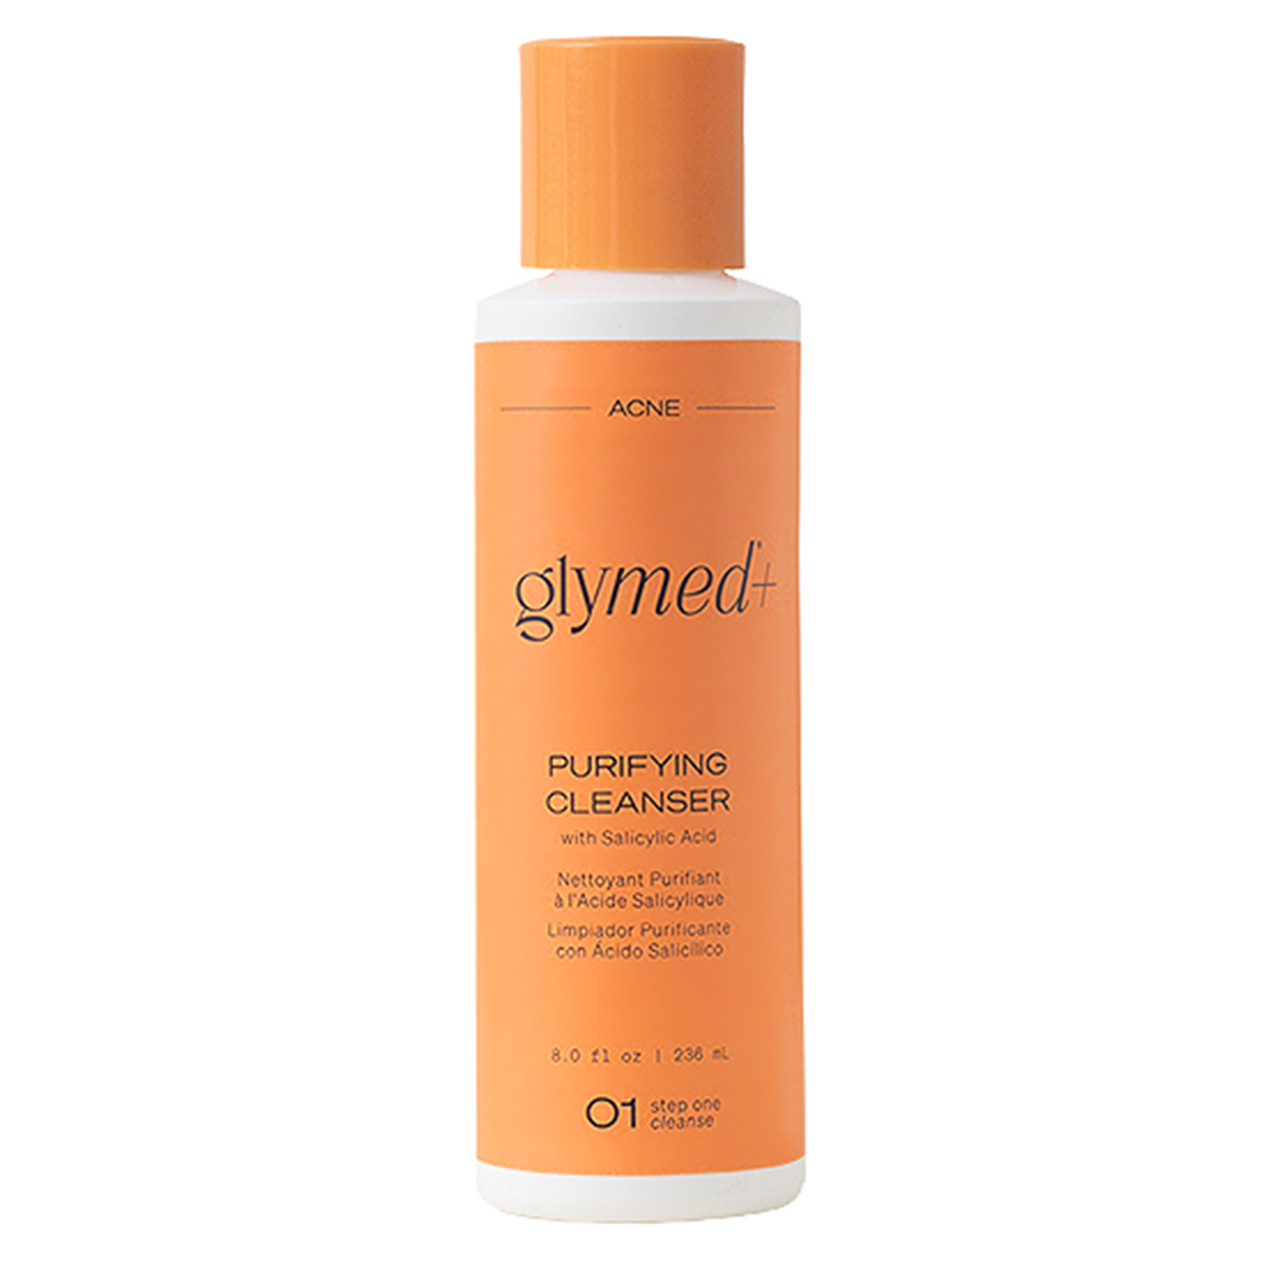 Glymed Plus Purifying Cleanser with Salicylic Acid - 8 oz 